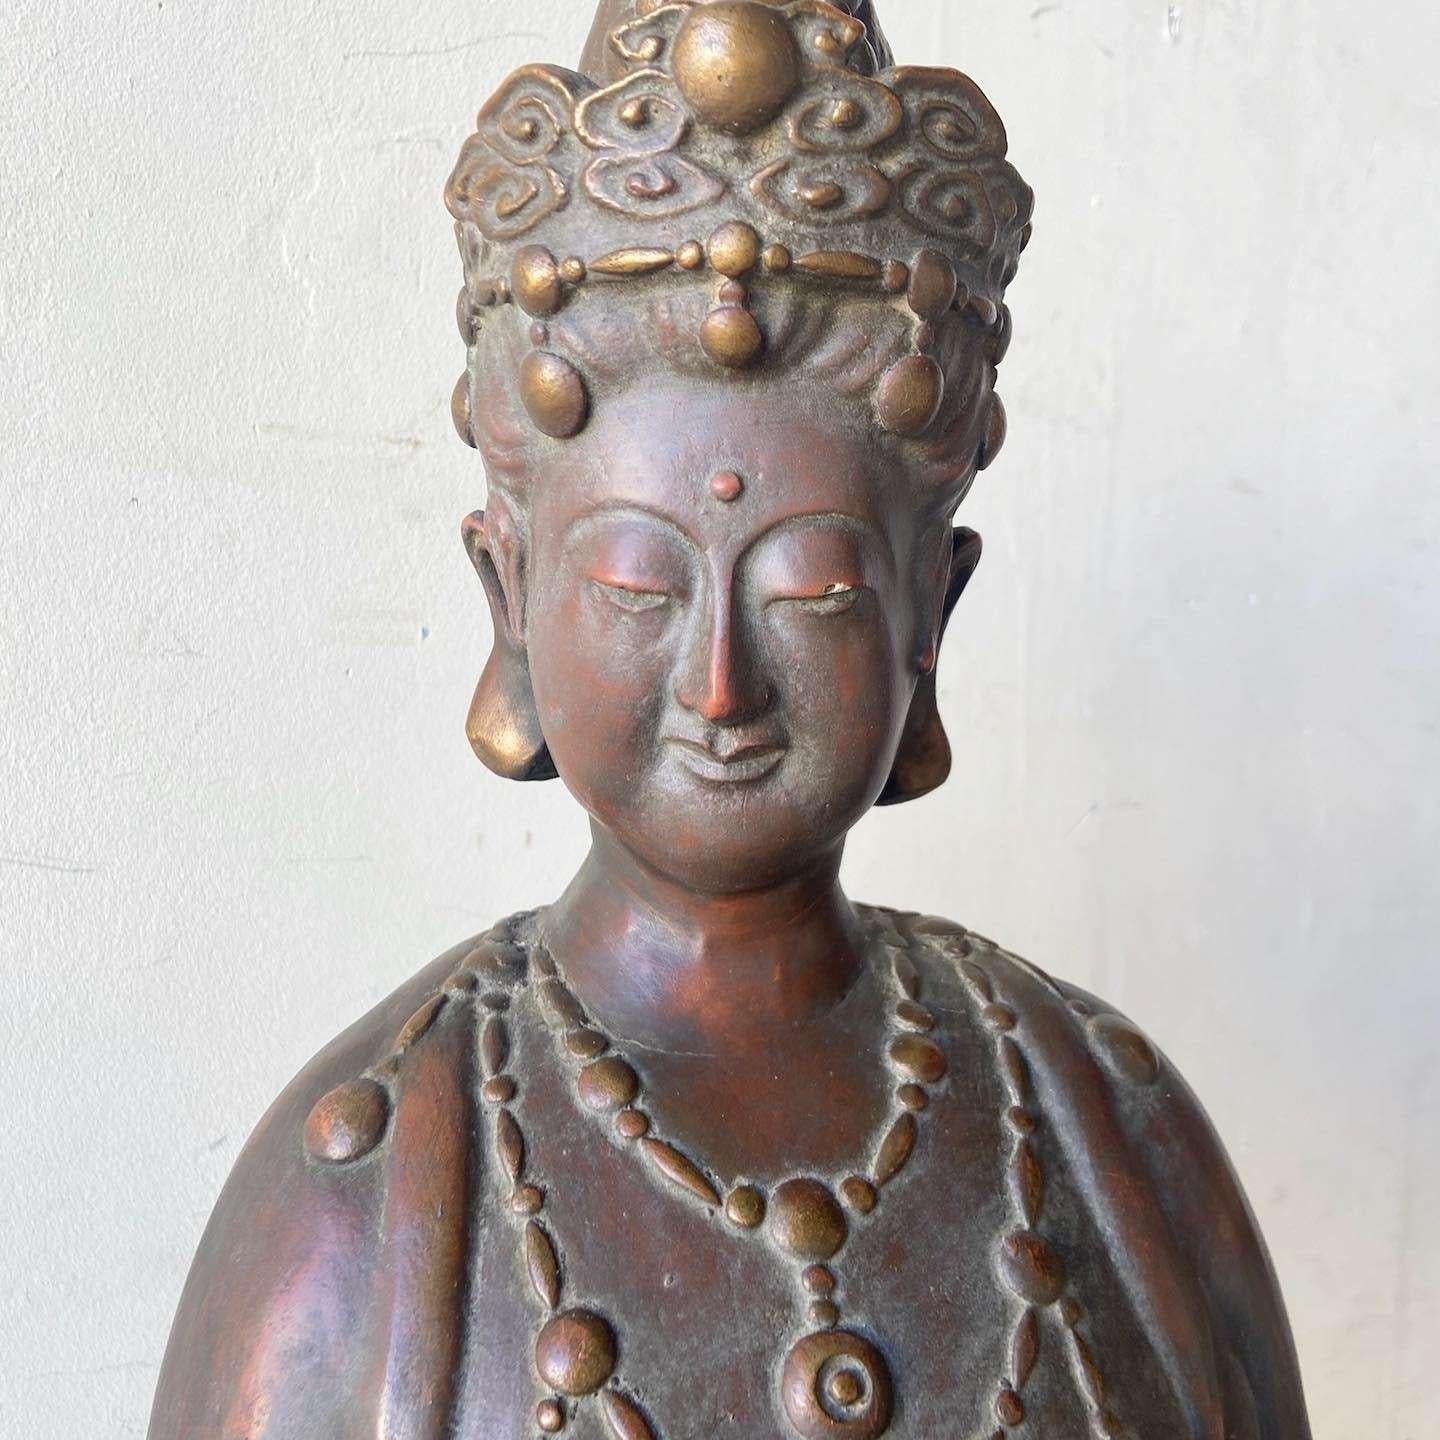 Vintage Chinese Ceramic Kwan-Yin Bodhisattva Sculpture For Sale 3